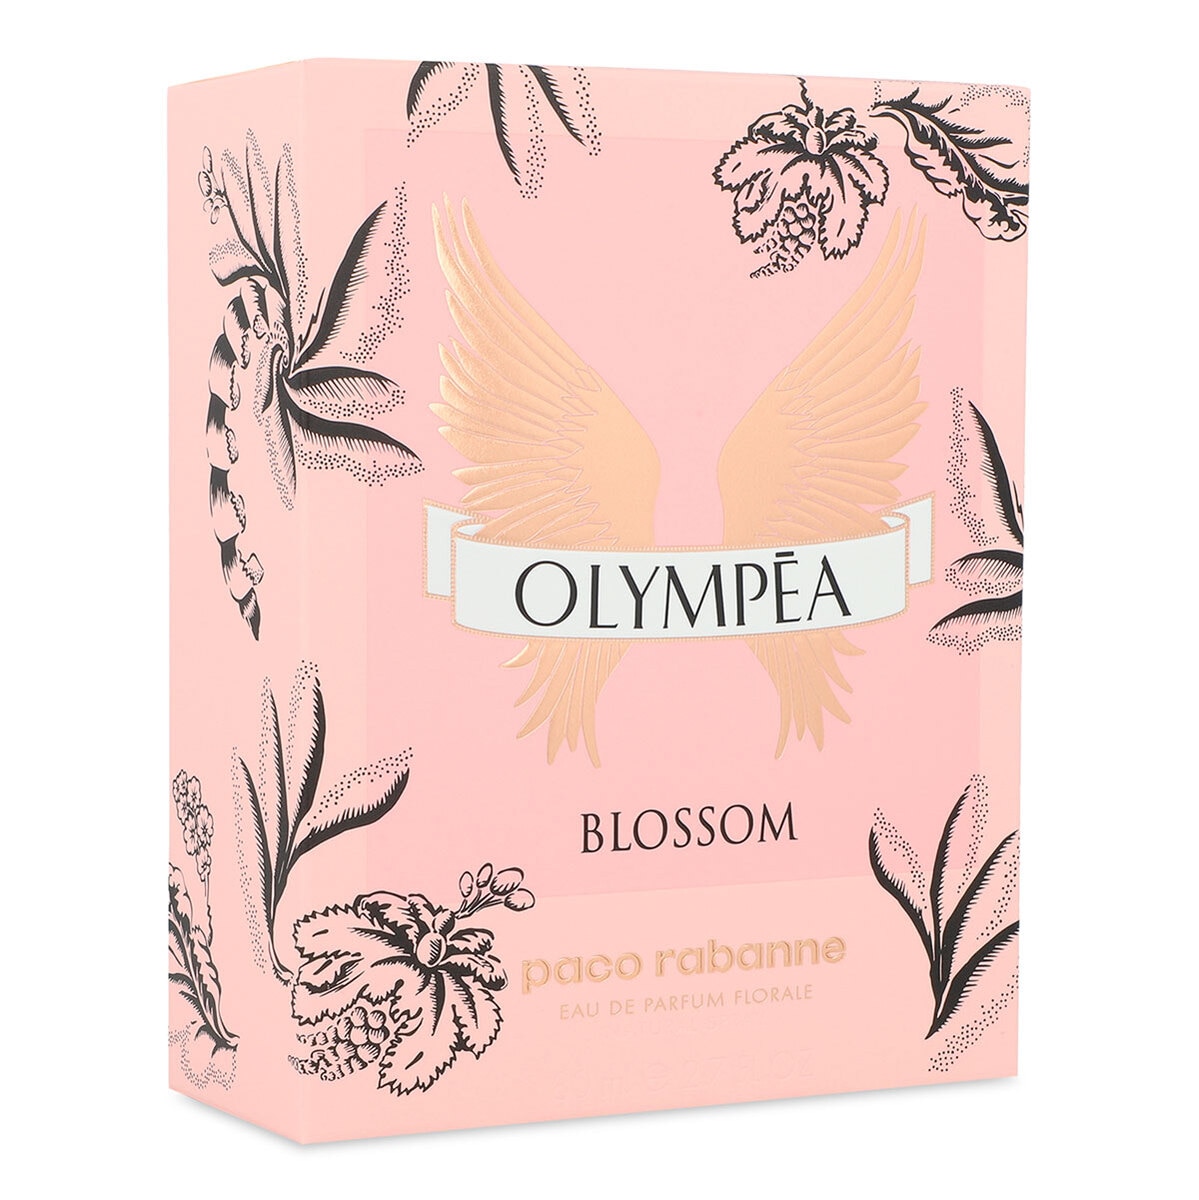 Paco Rabanne Olympea Blossom 80ml